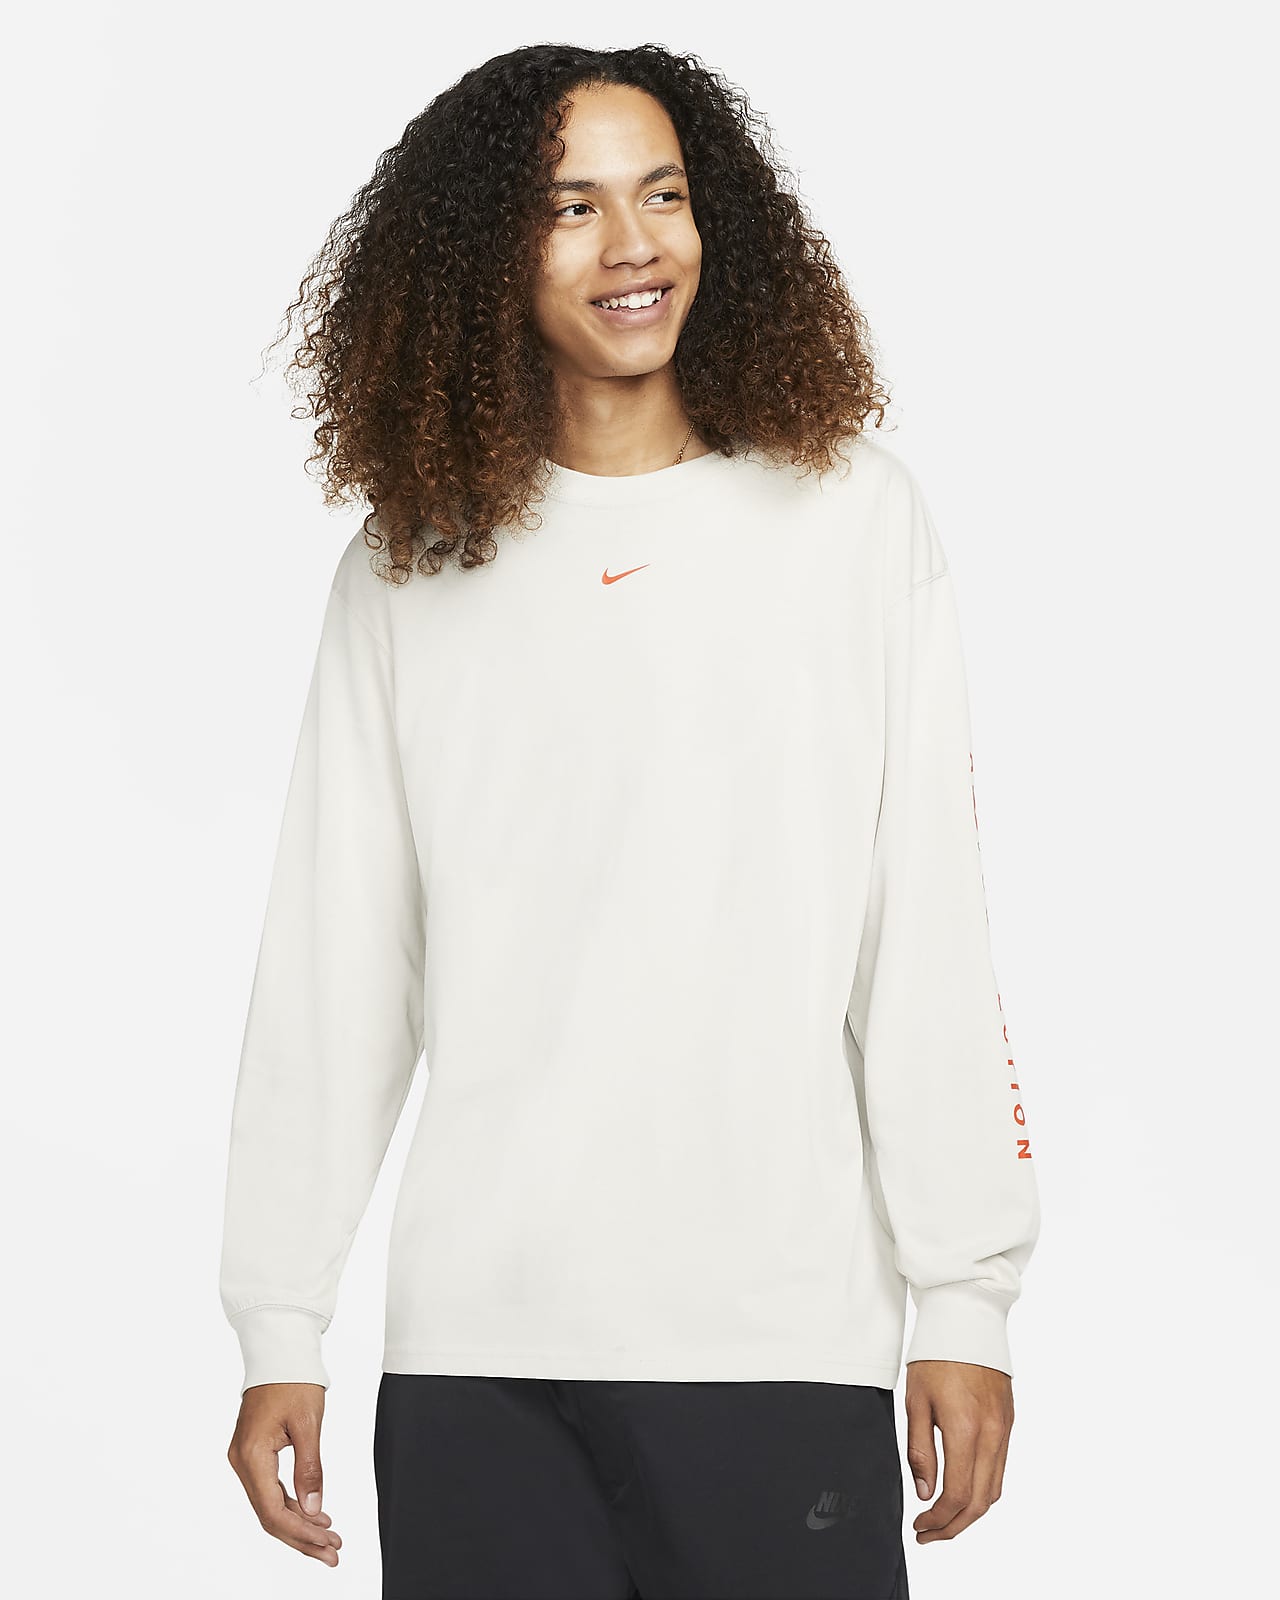 Naomi Osaka Long-Sleeve T-Shirt. Nike GB